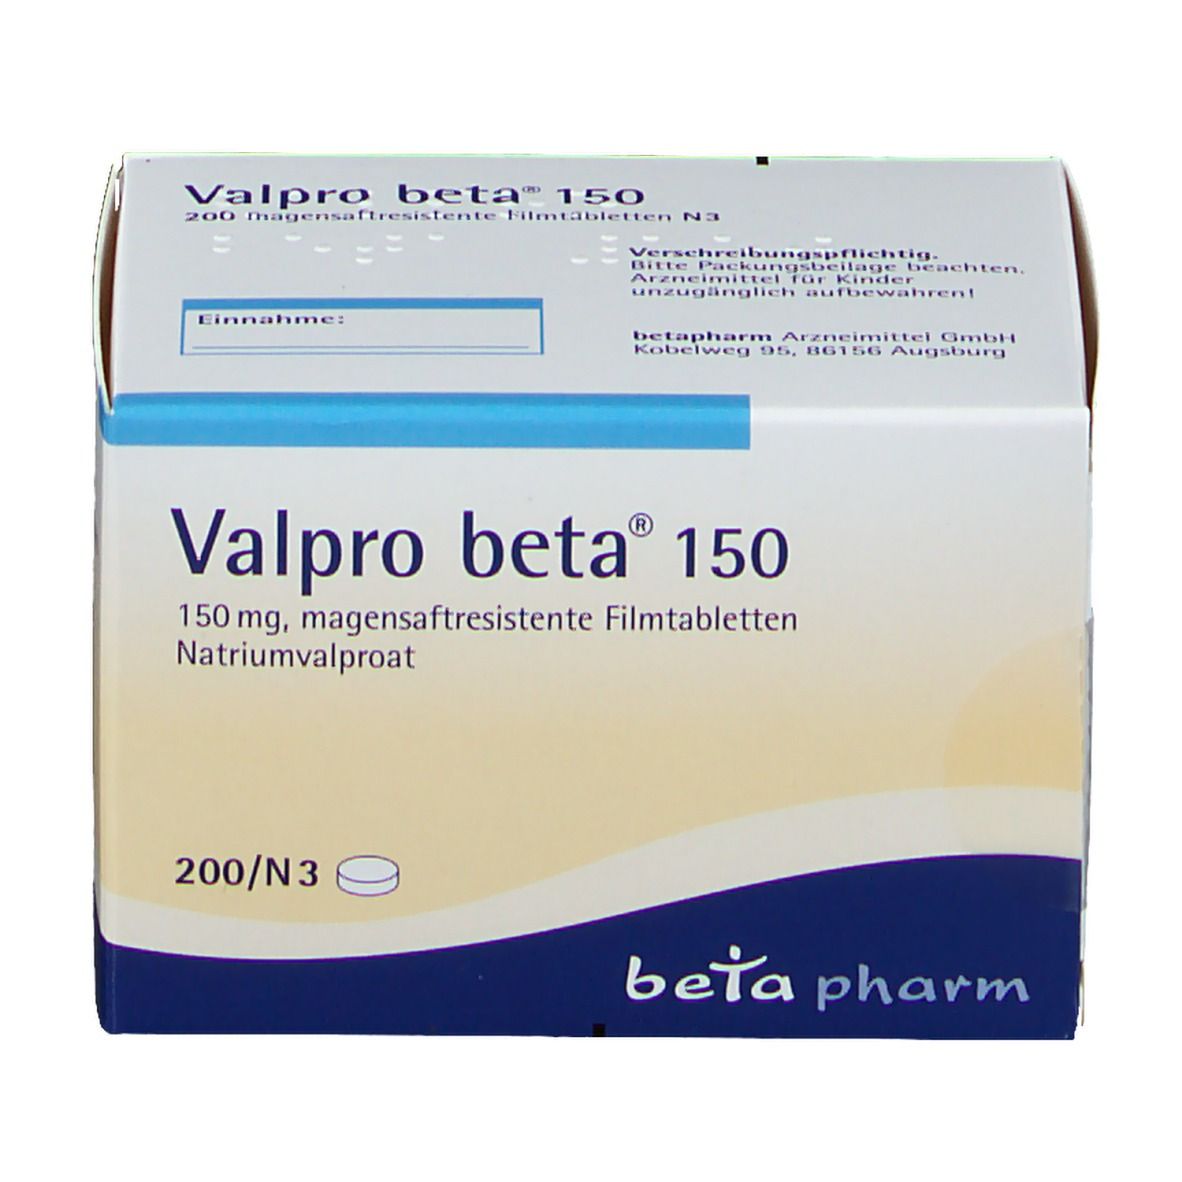 Valpro beta® 150